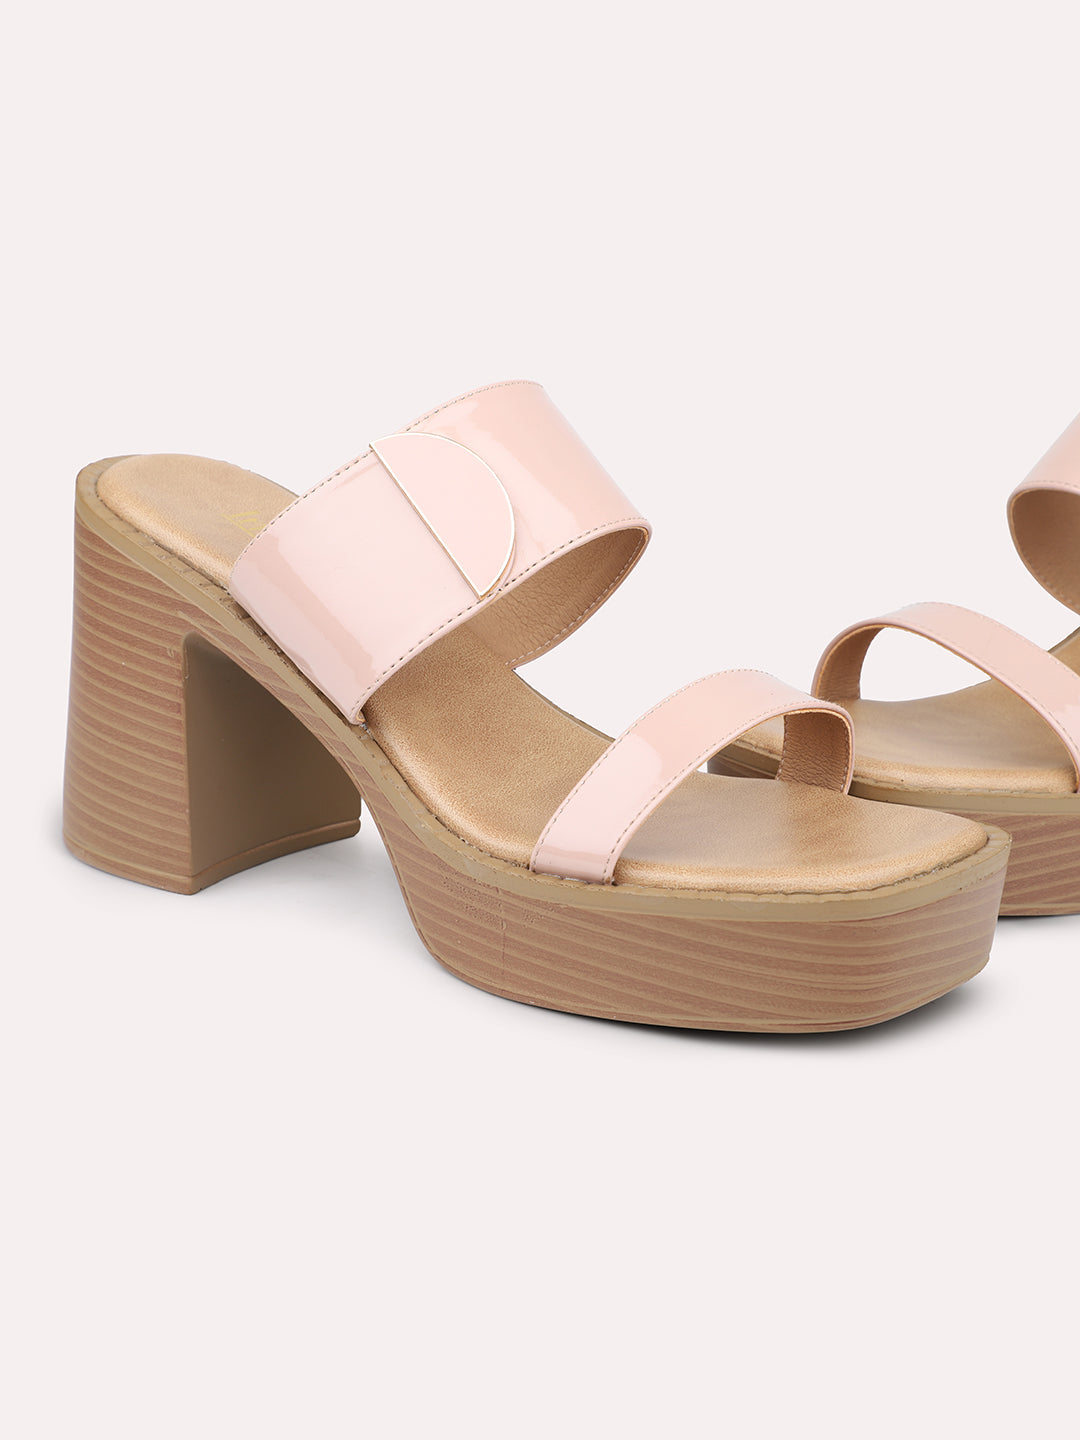 Buy Now Women White Textured Platform Heels – Inc5 Shoes